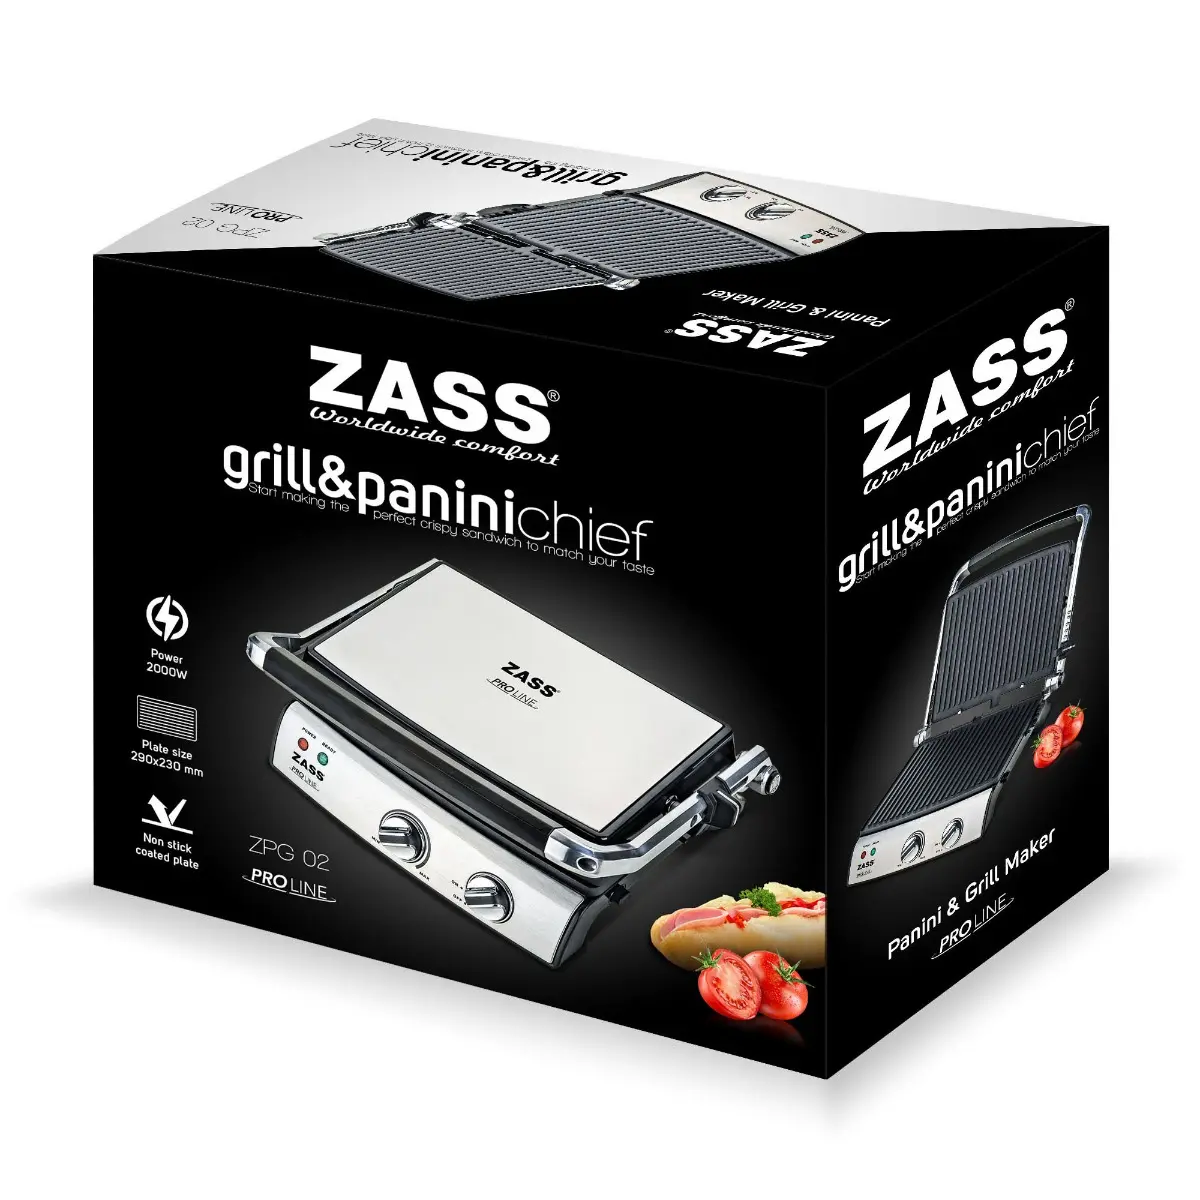 Gratar electric Zass Grill & Panini Chef ZPG 02, 2000 W, Inox / Negru